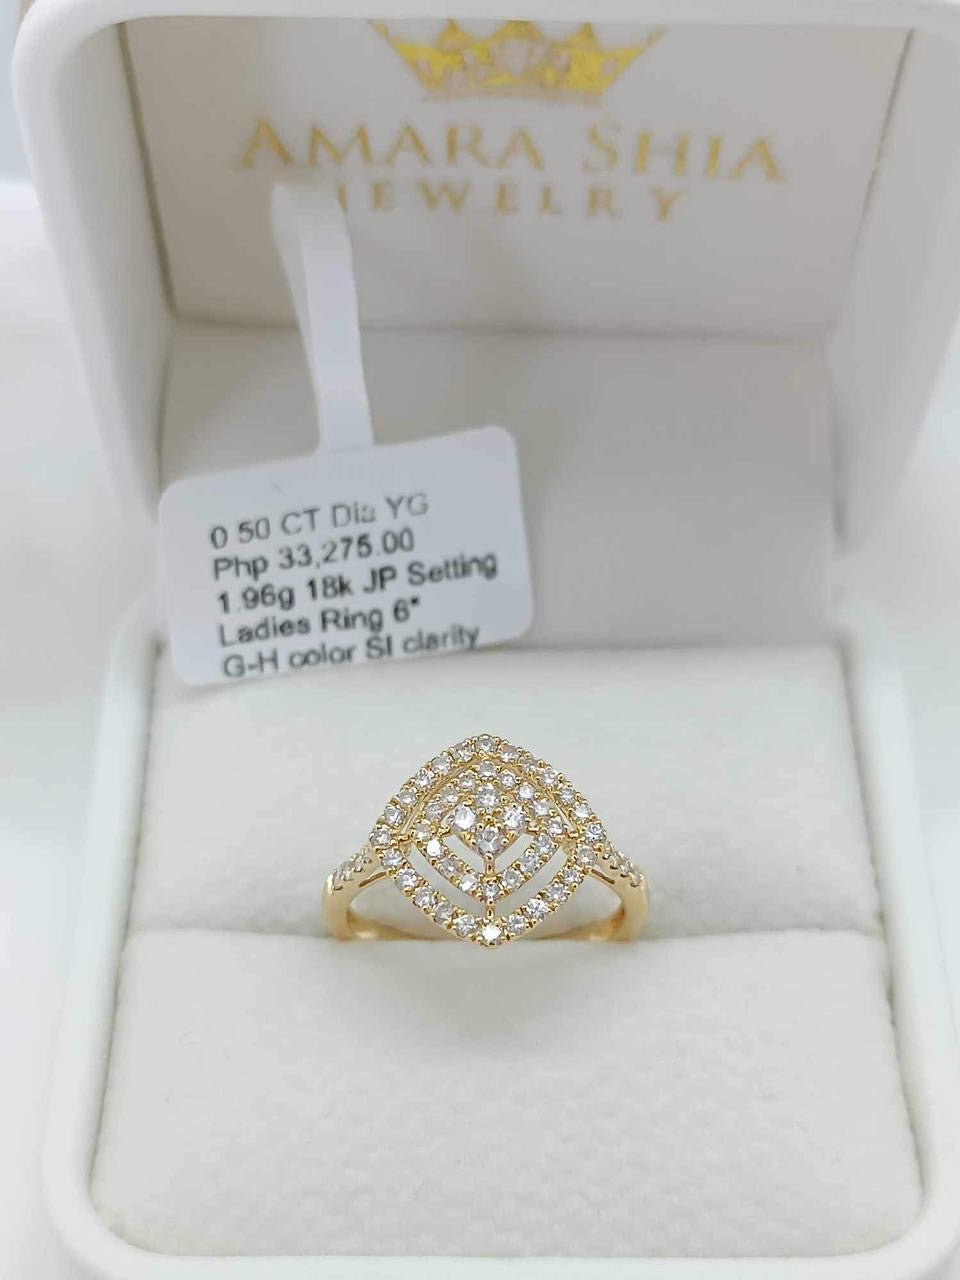 Tricia Diamond Ring